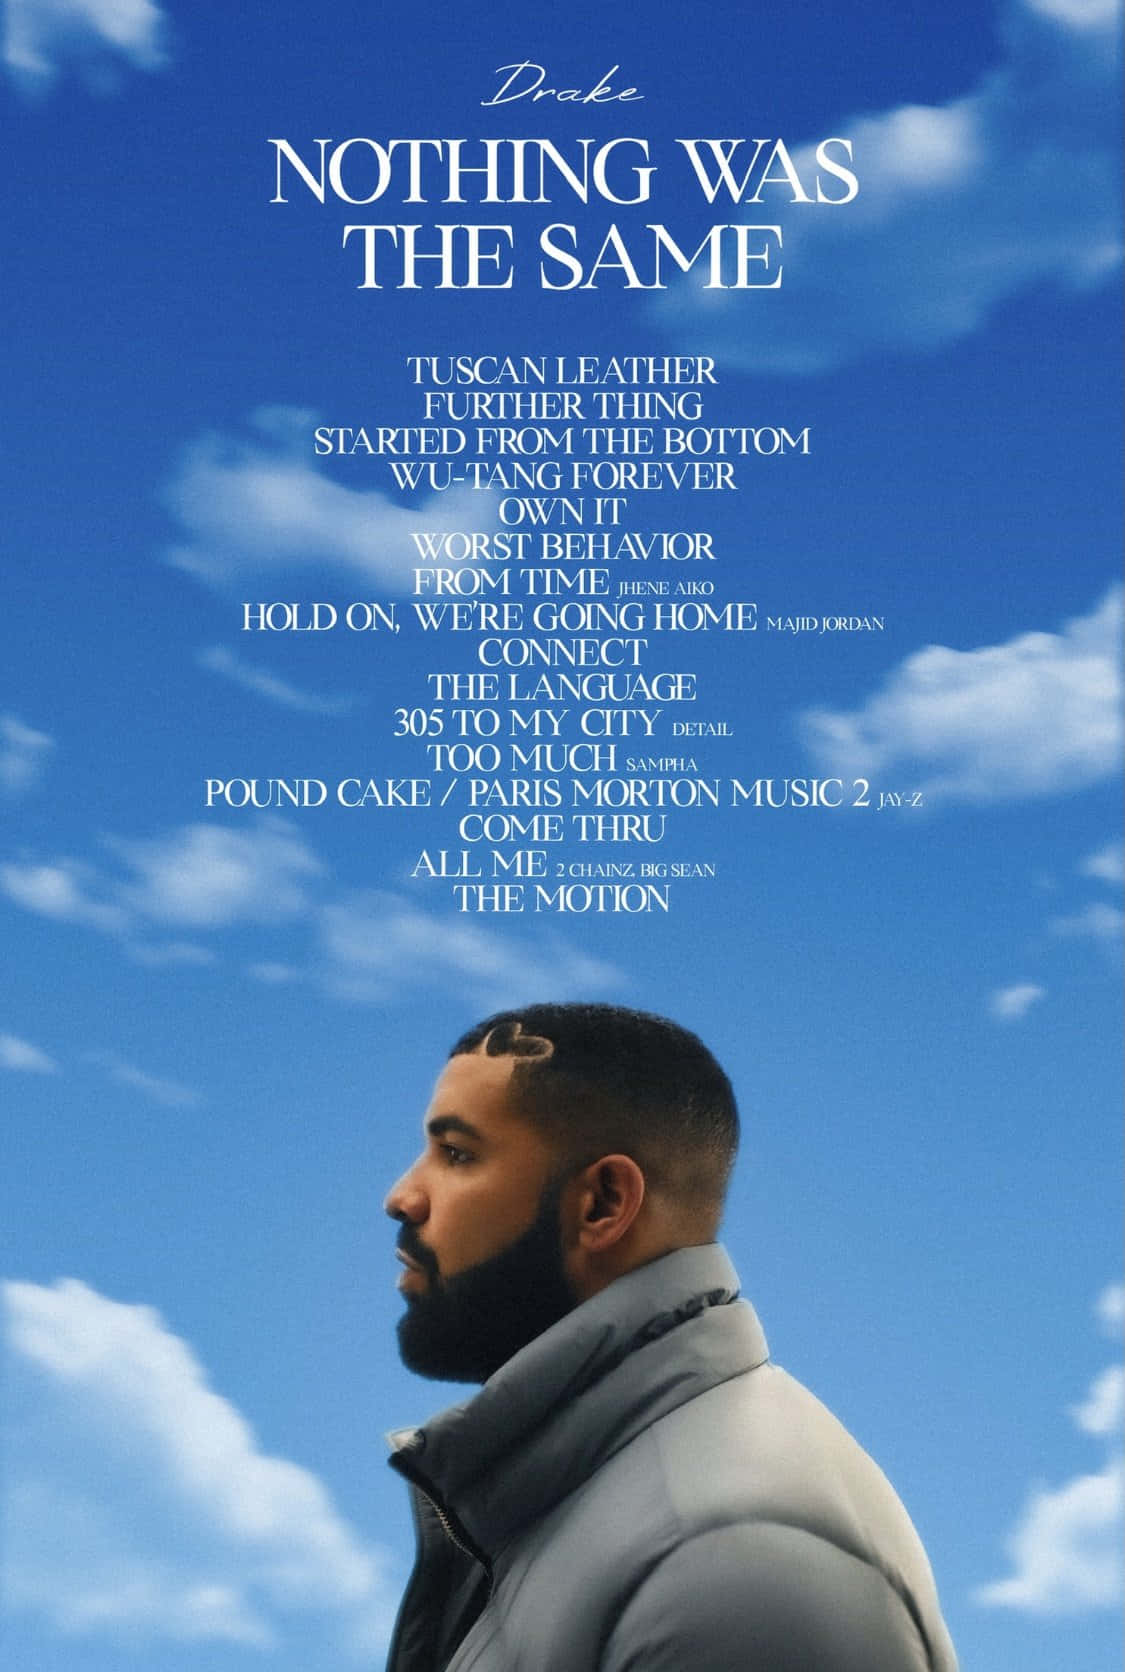 Drake  Nothing Was The Same  best album put out in a while  Drake  wallpapers Drake photos Aubrey drake